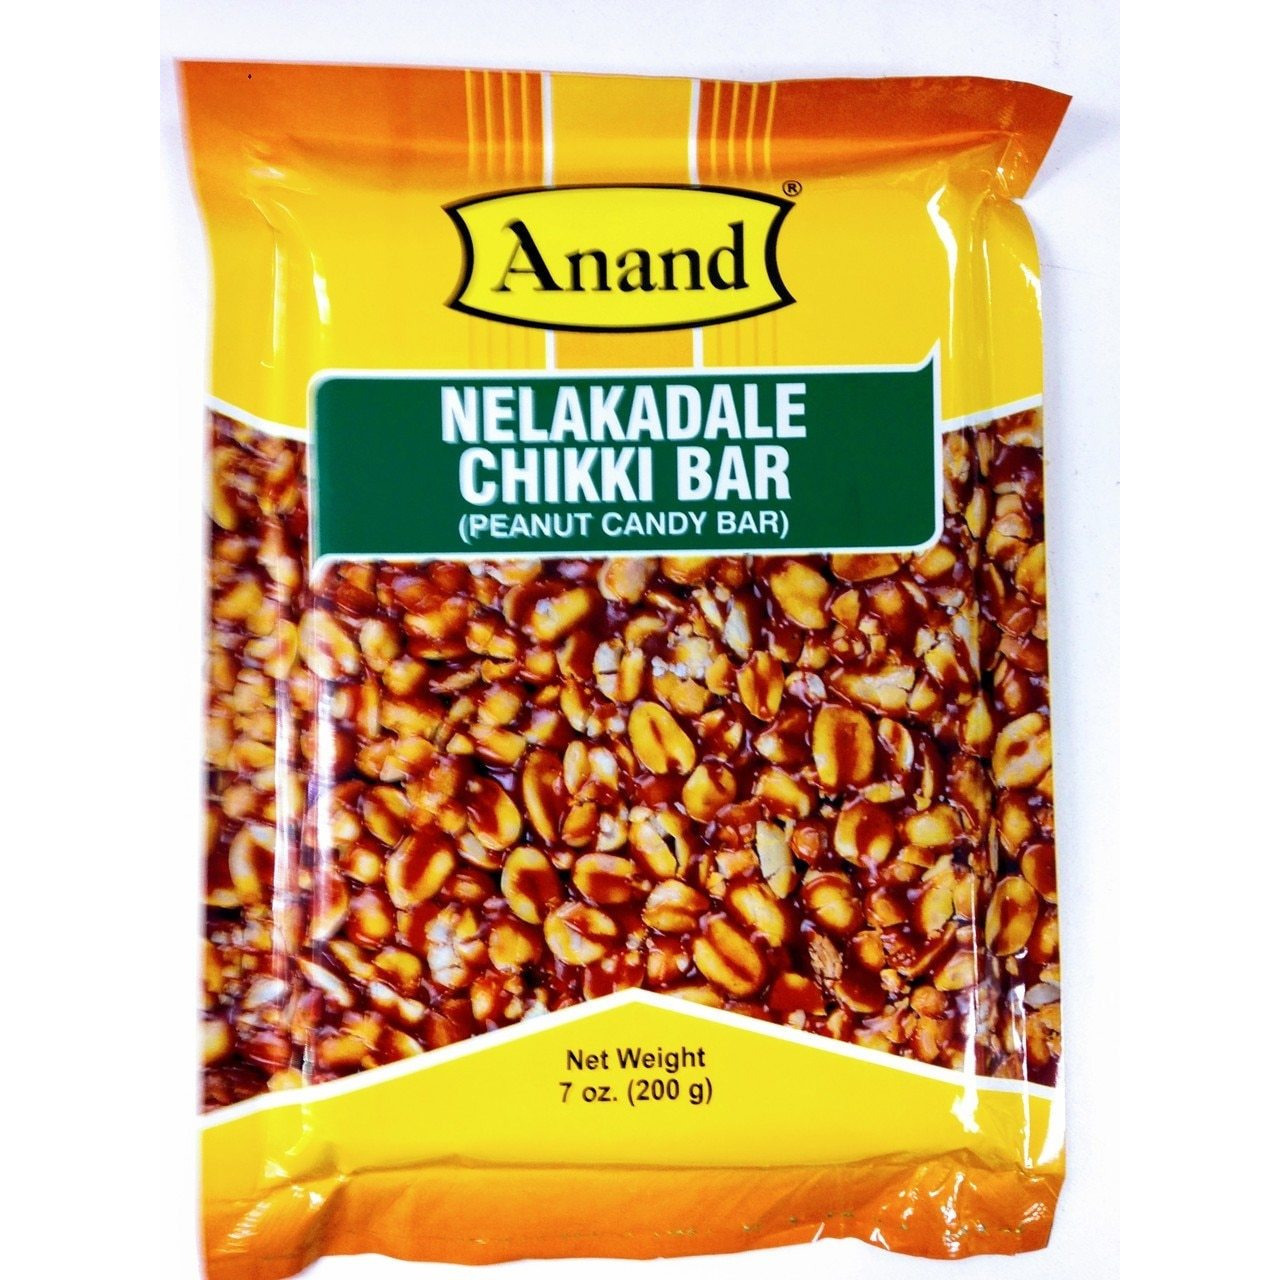 Pack of 2 - Anand Nelakadle Chikki Bar - Peanut Candy Bar - 7 Oz (200 Gm)